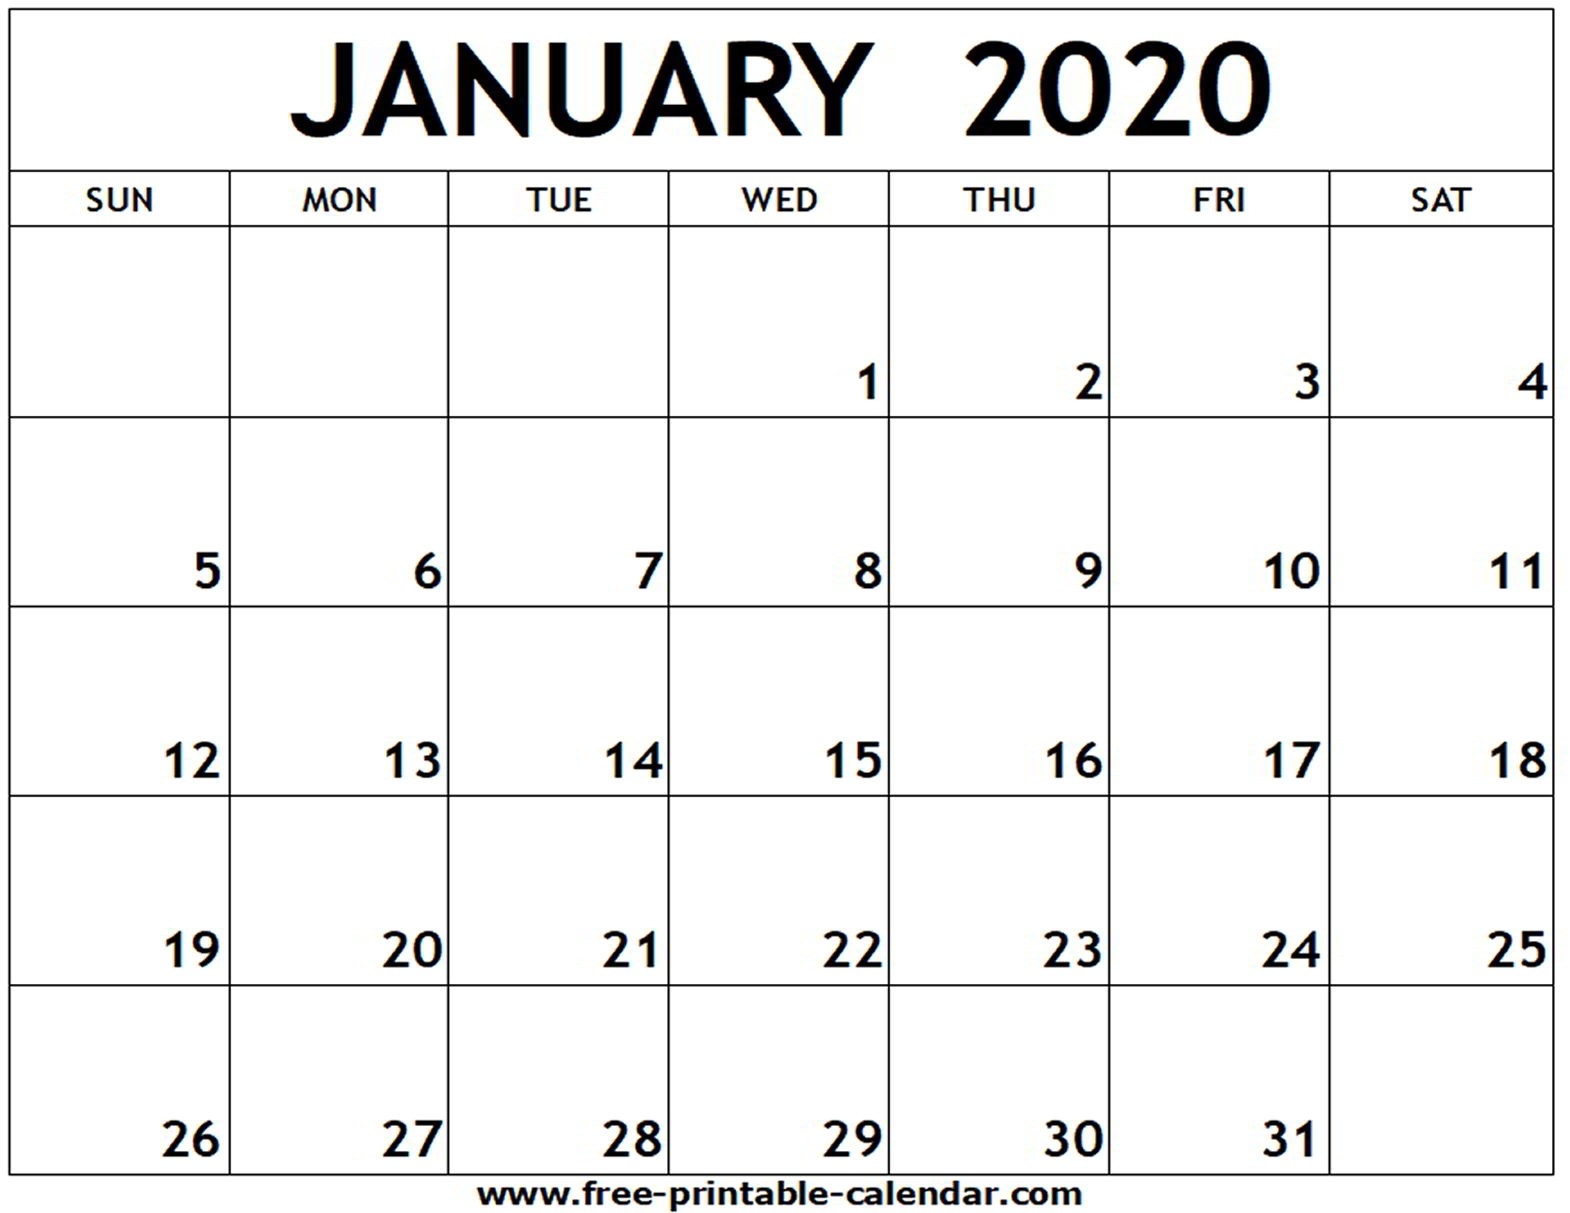 January 2020 Printable Calendar - Free-Printable-Calendar-January 2020 Canadian Calendar